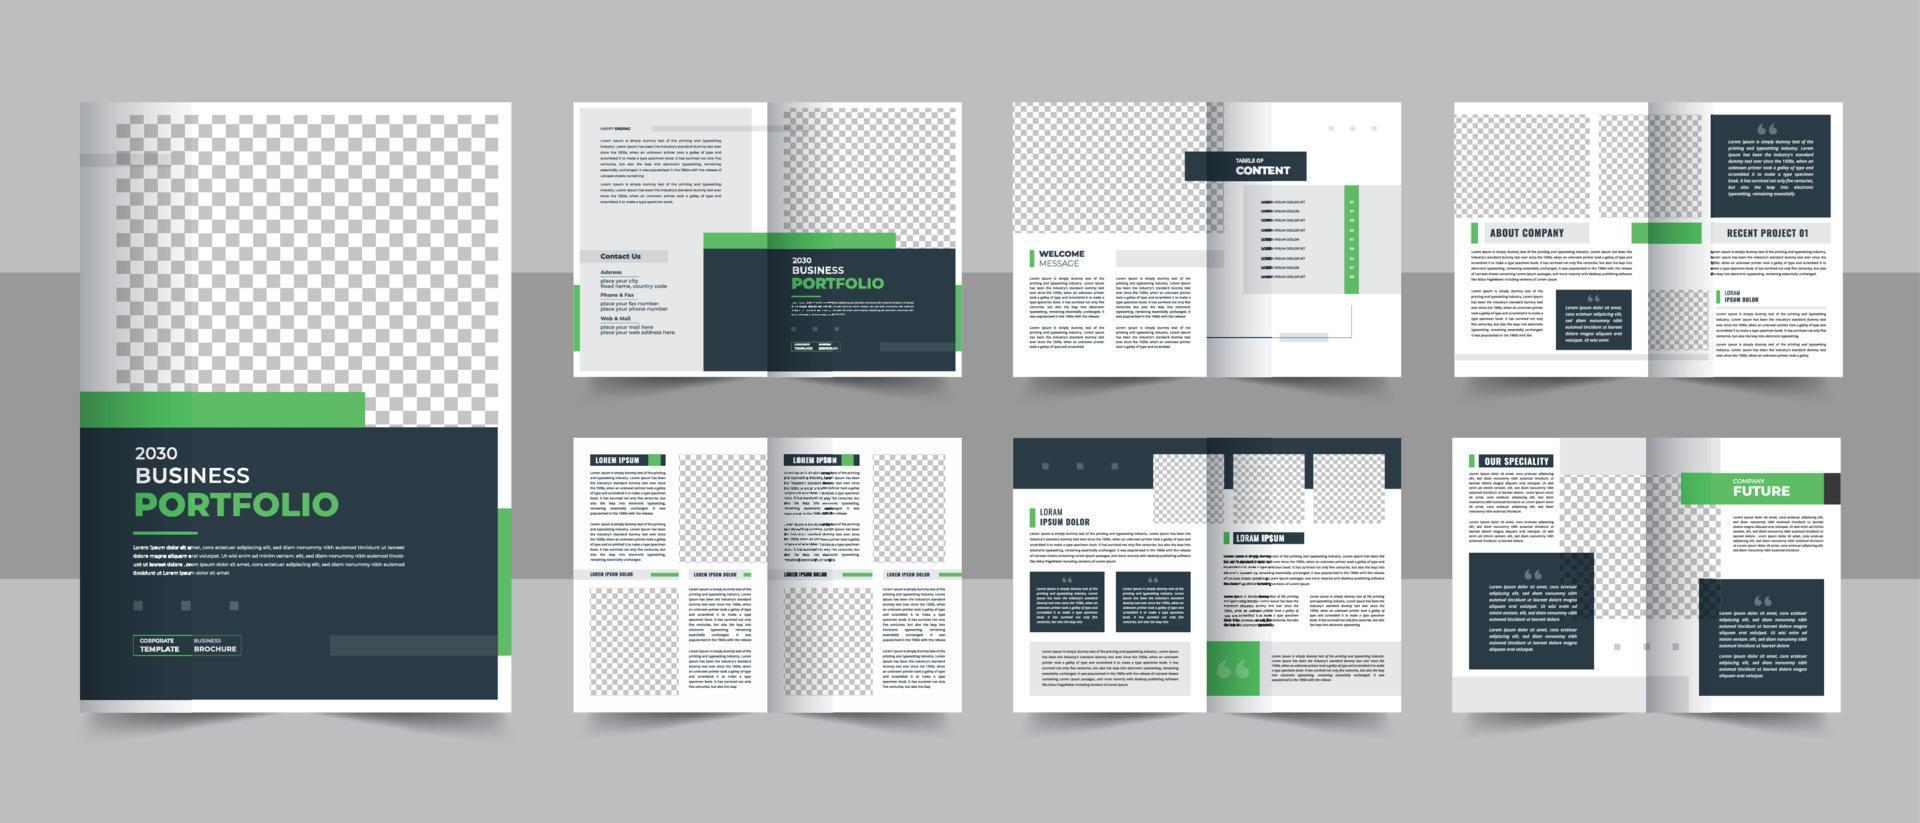 Company profile brochure template or multipage business brochure design template vector